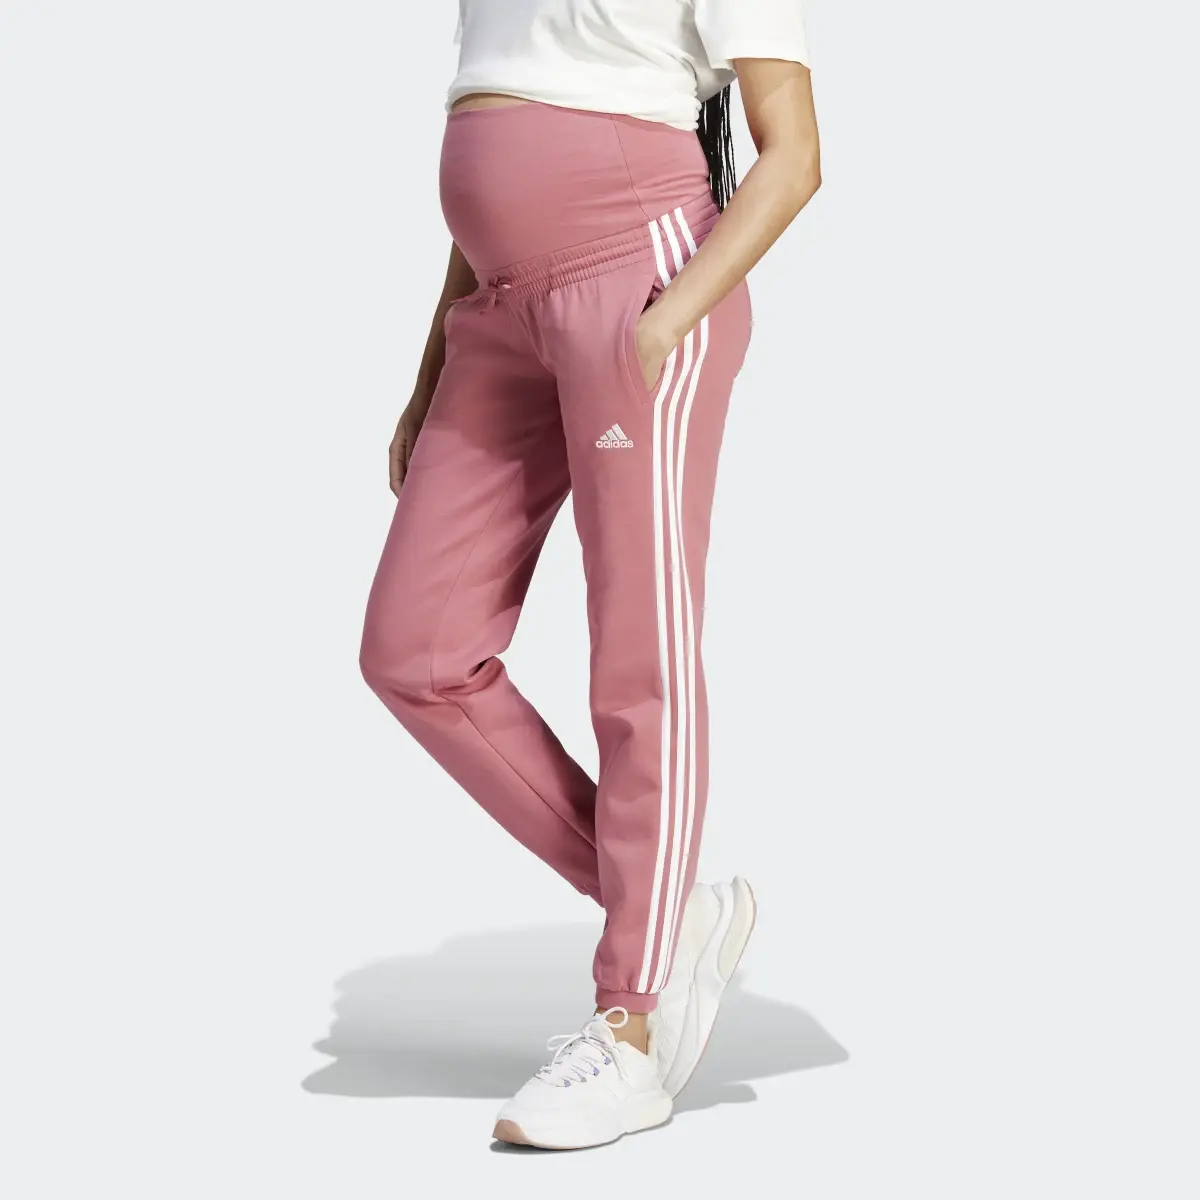 Adidas Maternity Pants. 1